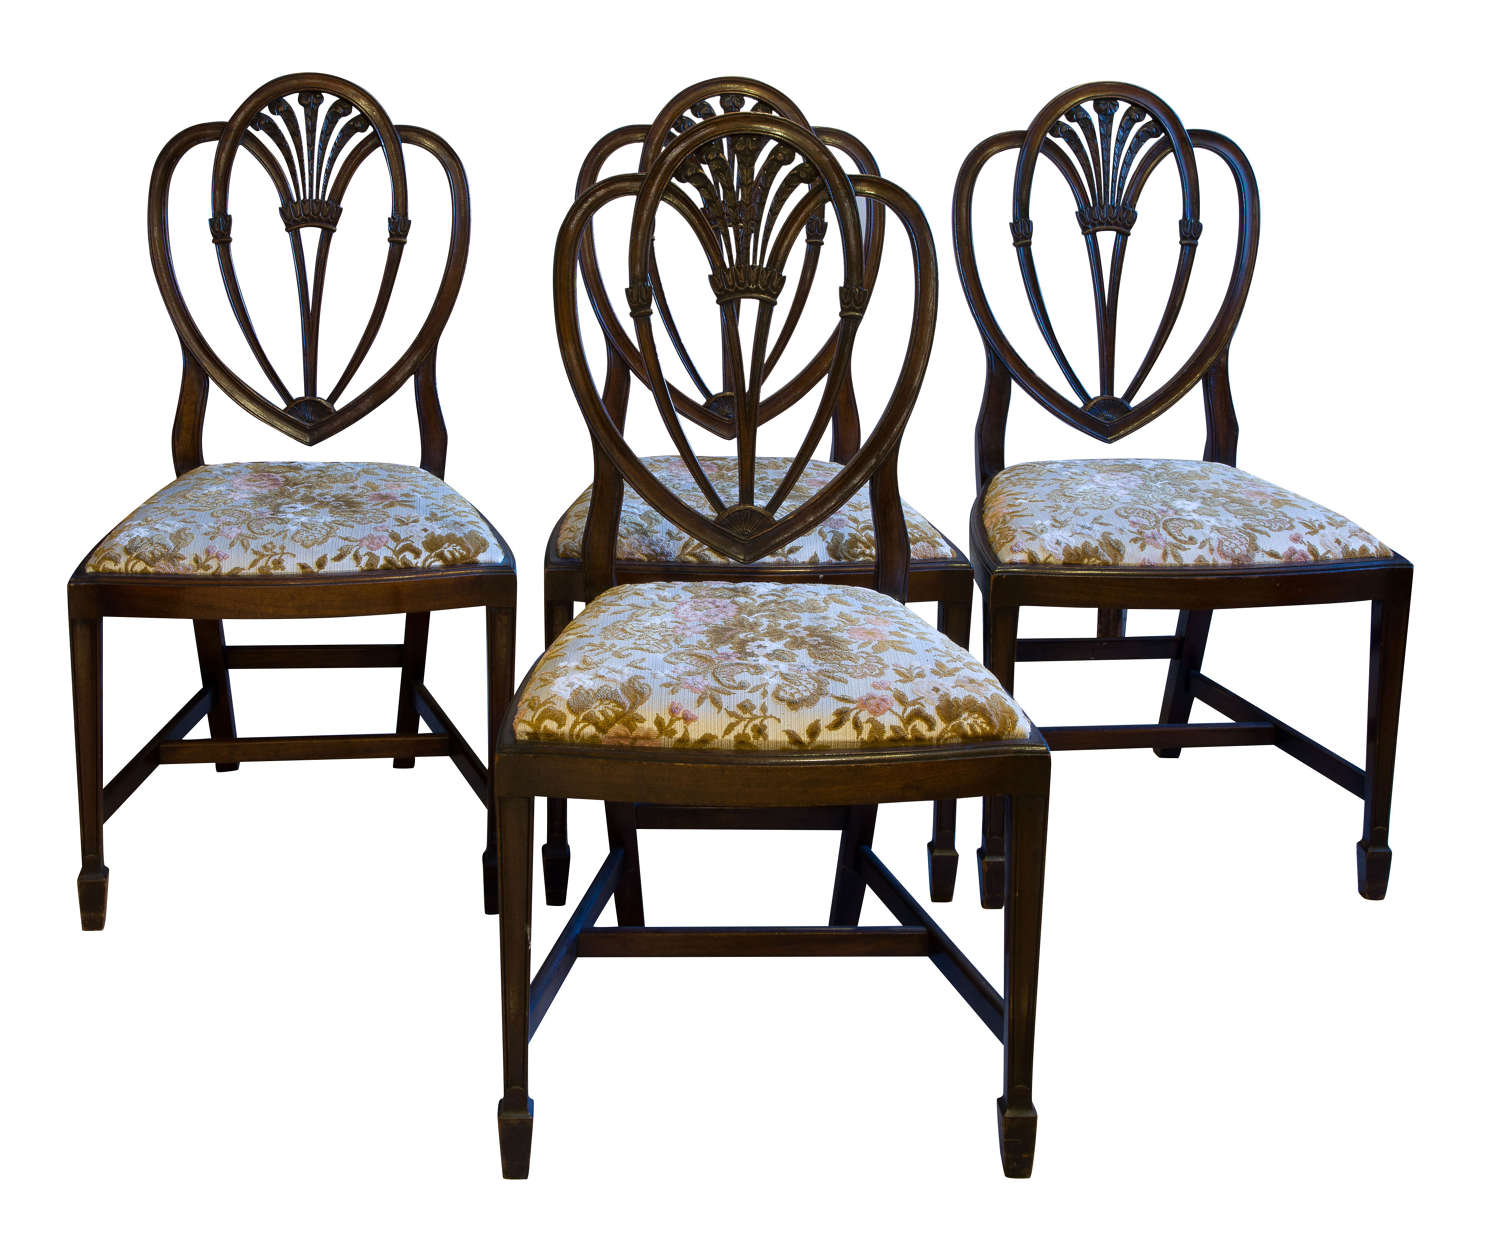 A set of 4 Mahogany Hepplewhite style chairs